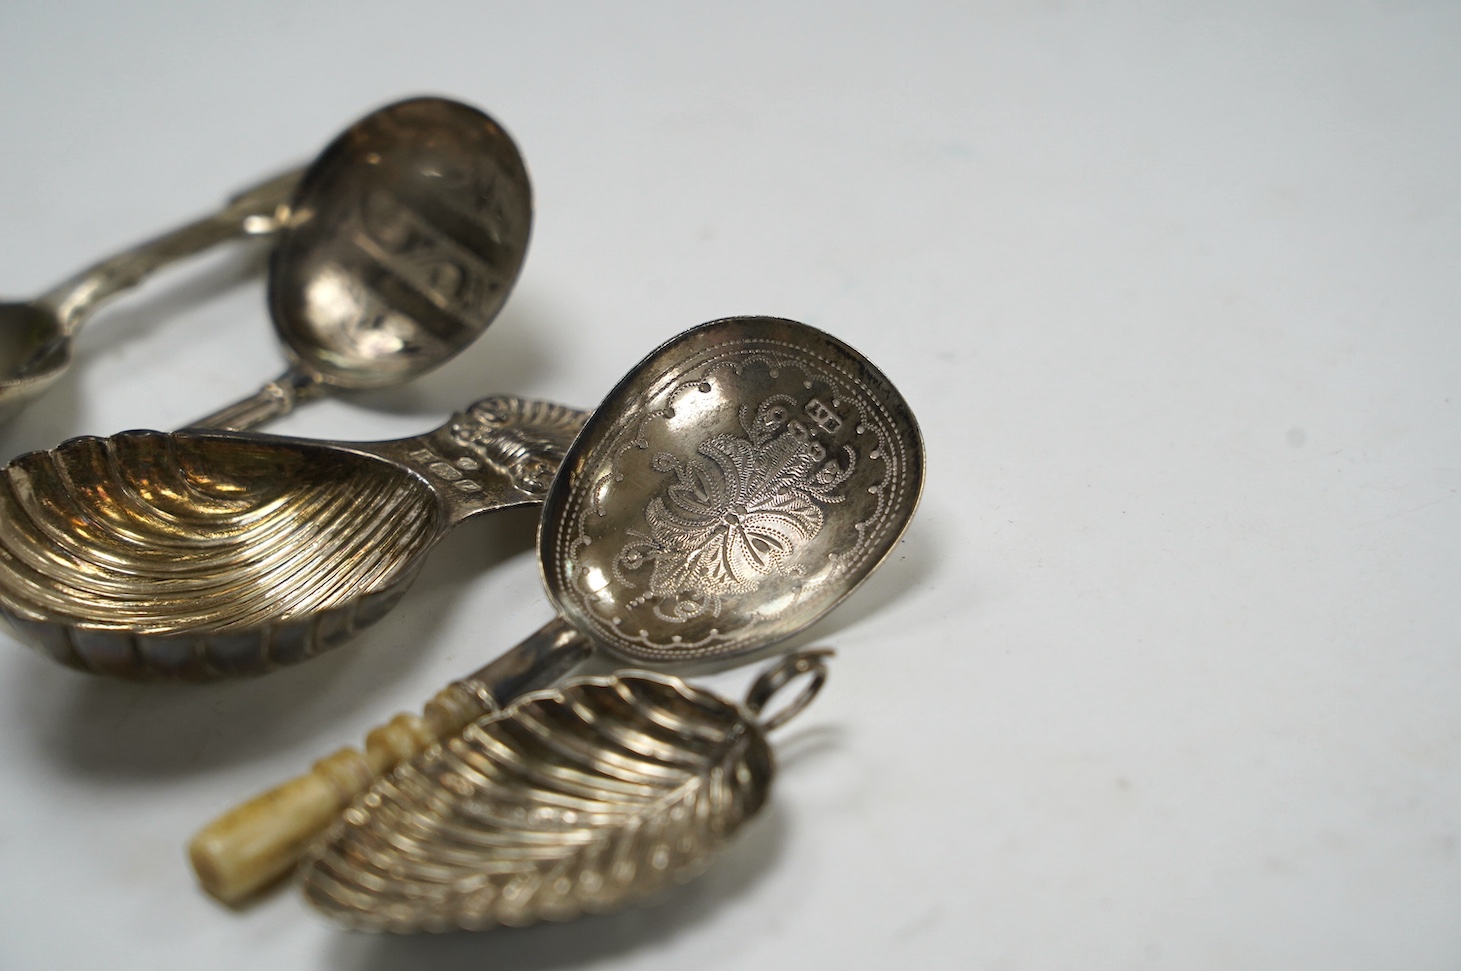 Five assorted silver caddy spoons, including fiddle pattern by Hayne & Cater, London, 1843, foliate terminal handled by George Unite, Birmingham, 1845, bone handled by Hilliard & Thomason, Birmingham, 1879, modern shell